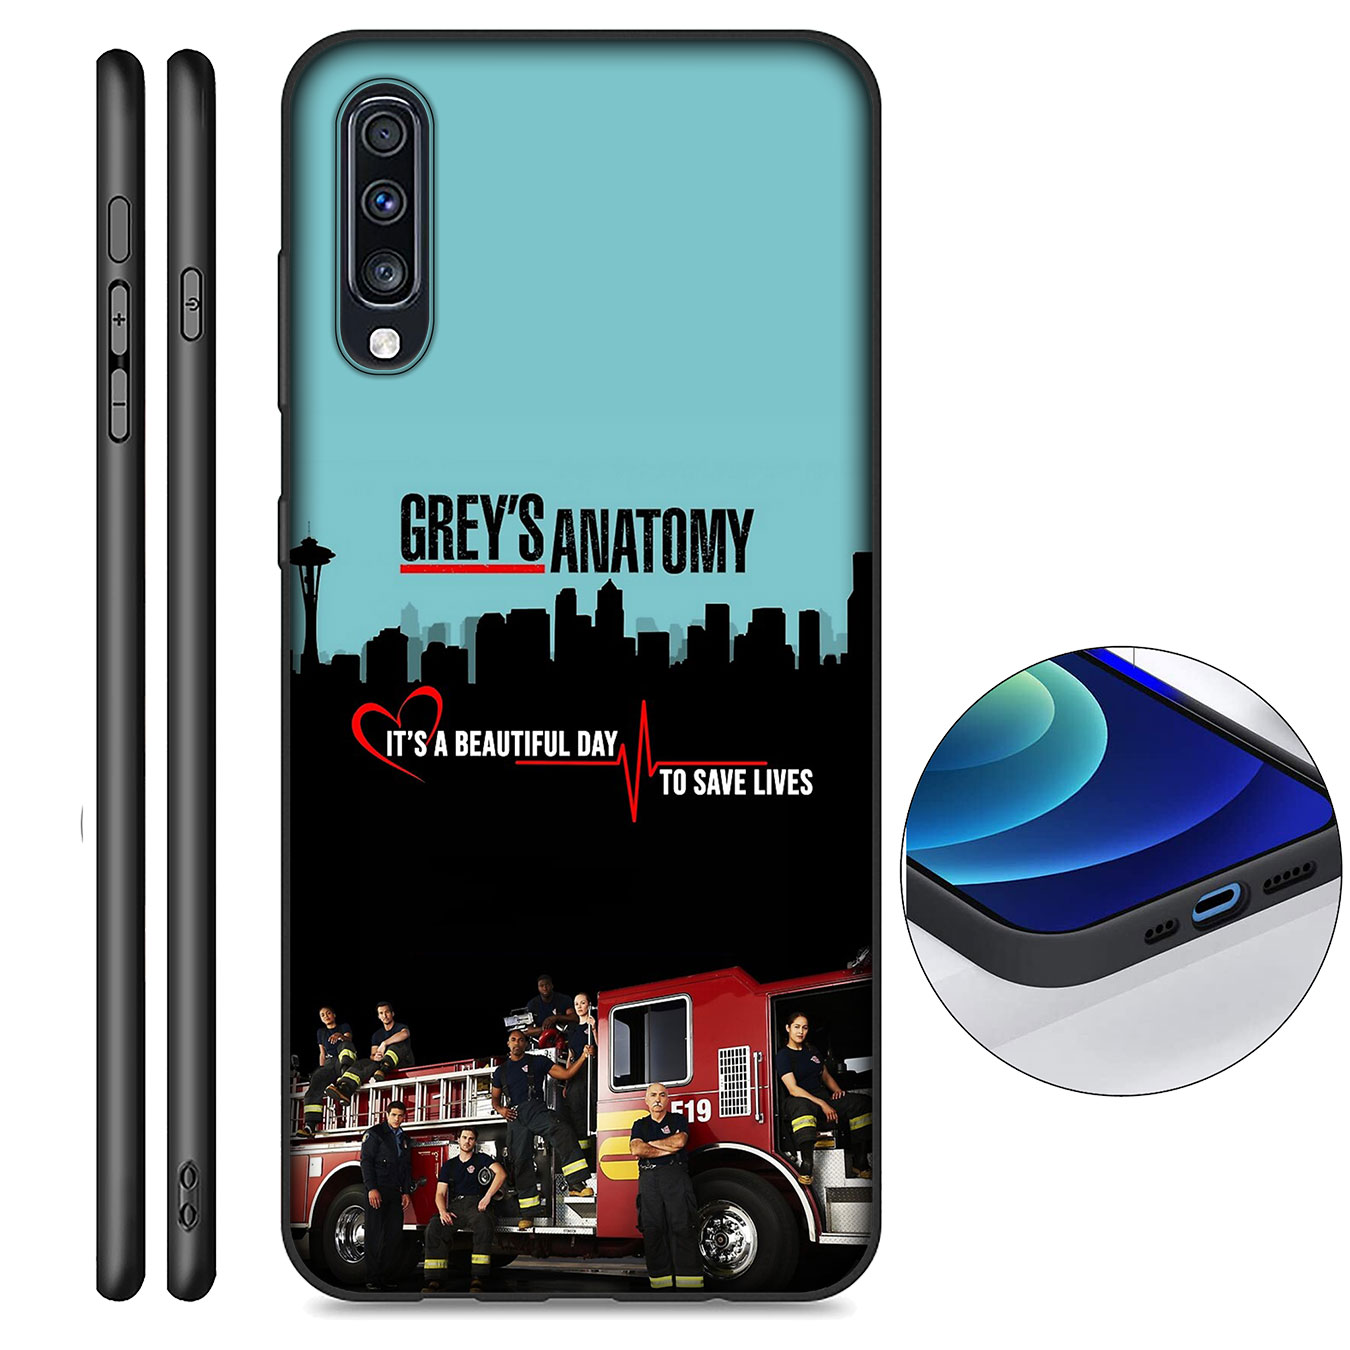 Samsung Galaxy A9 A8 A7 A6 Plus J8 2018 + A21S A70 M20 A6+ A8+ 6Plus Phone Case Soft Silicone Casing Grey's Anatomy